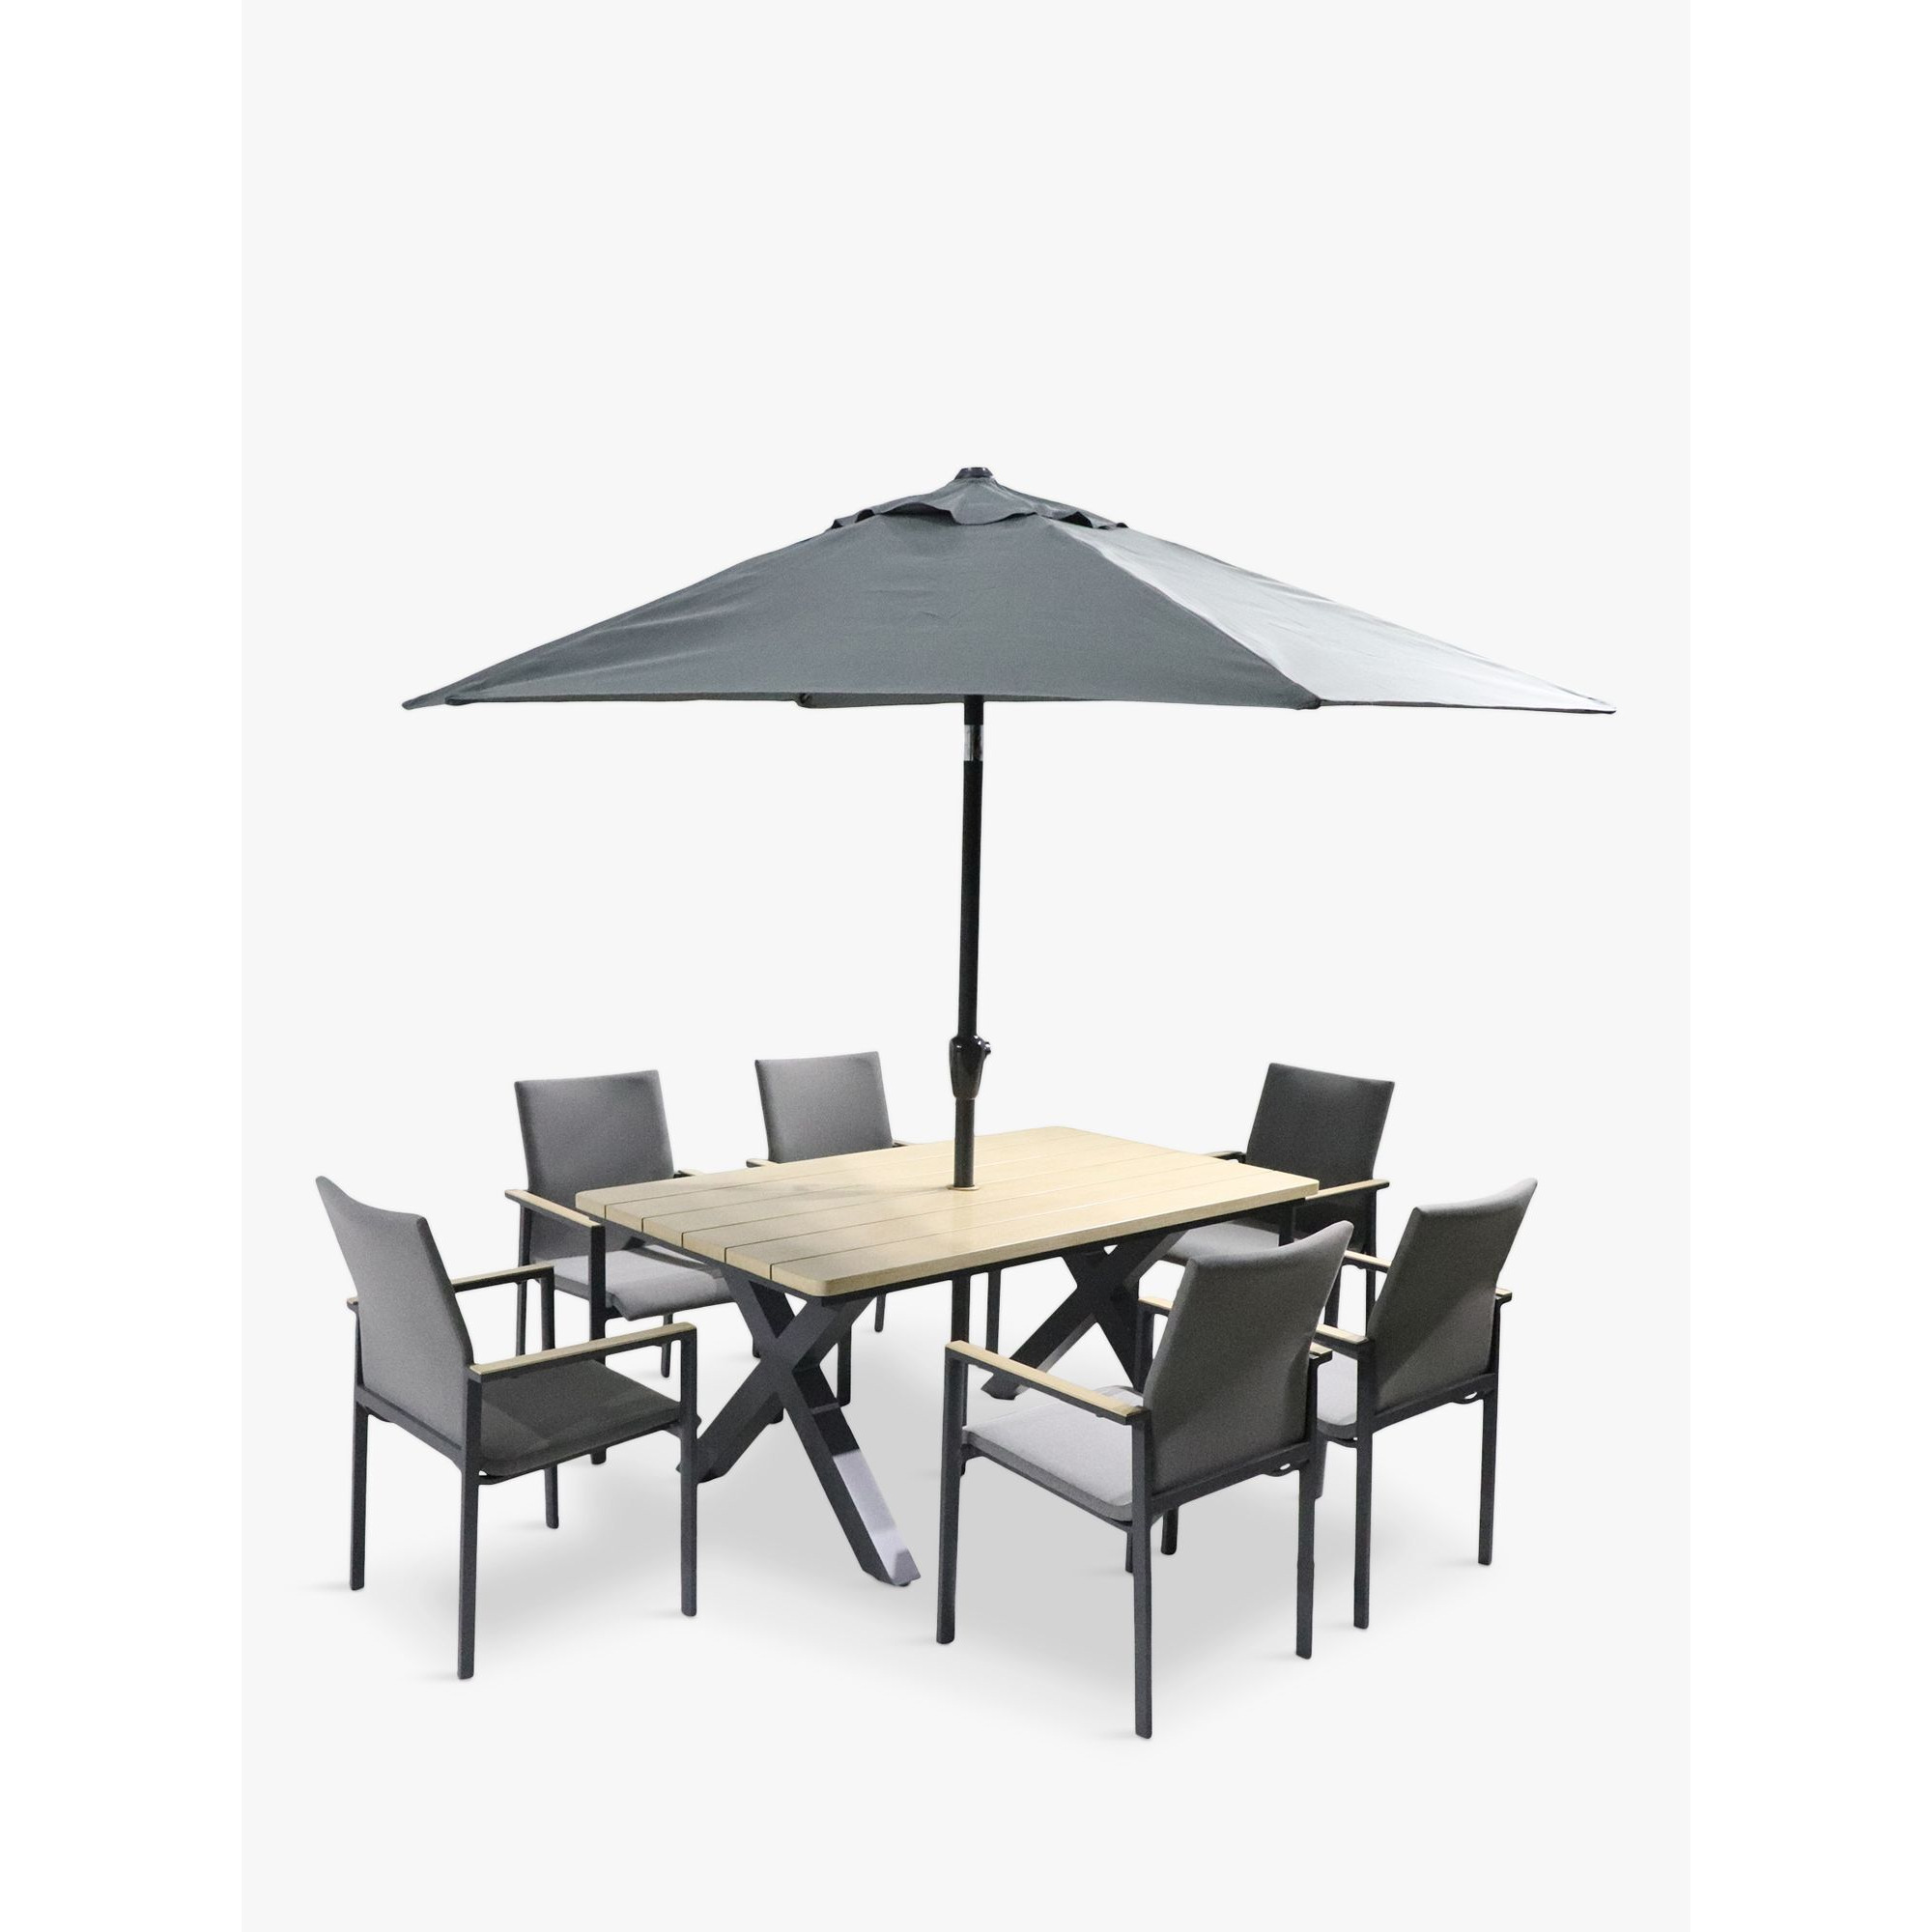 LG Outdoor Venice 6-Seater Garden Dining Set, Grey - image 1